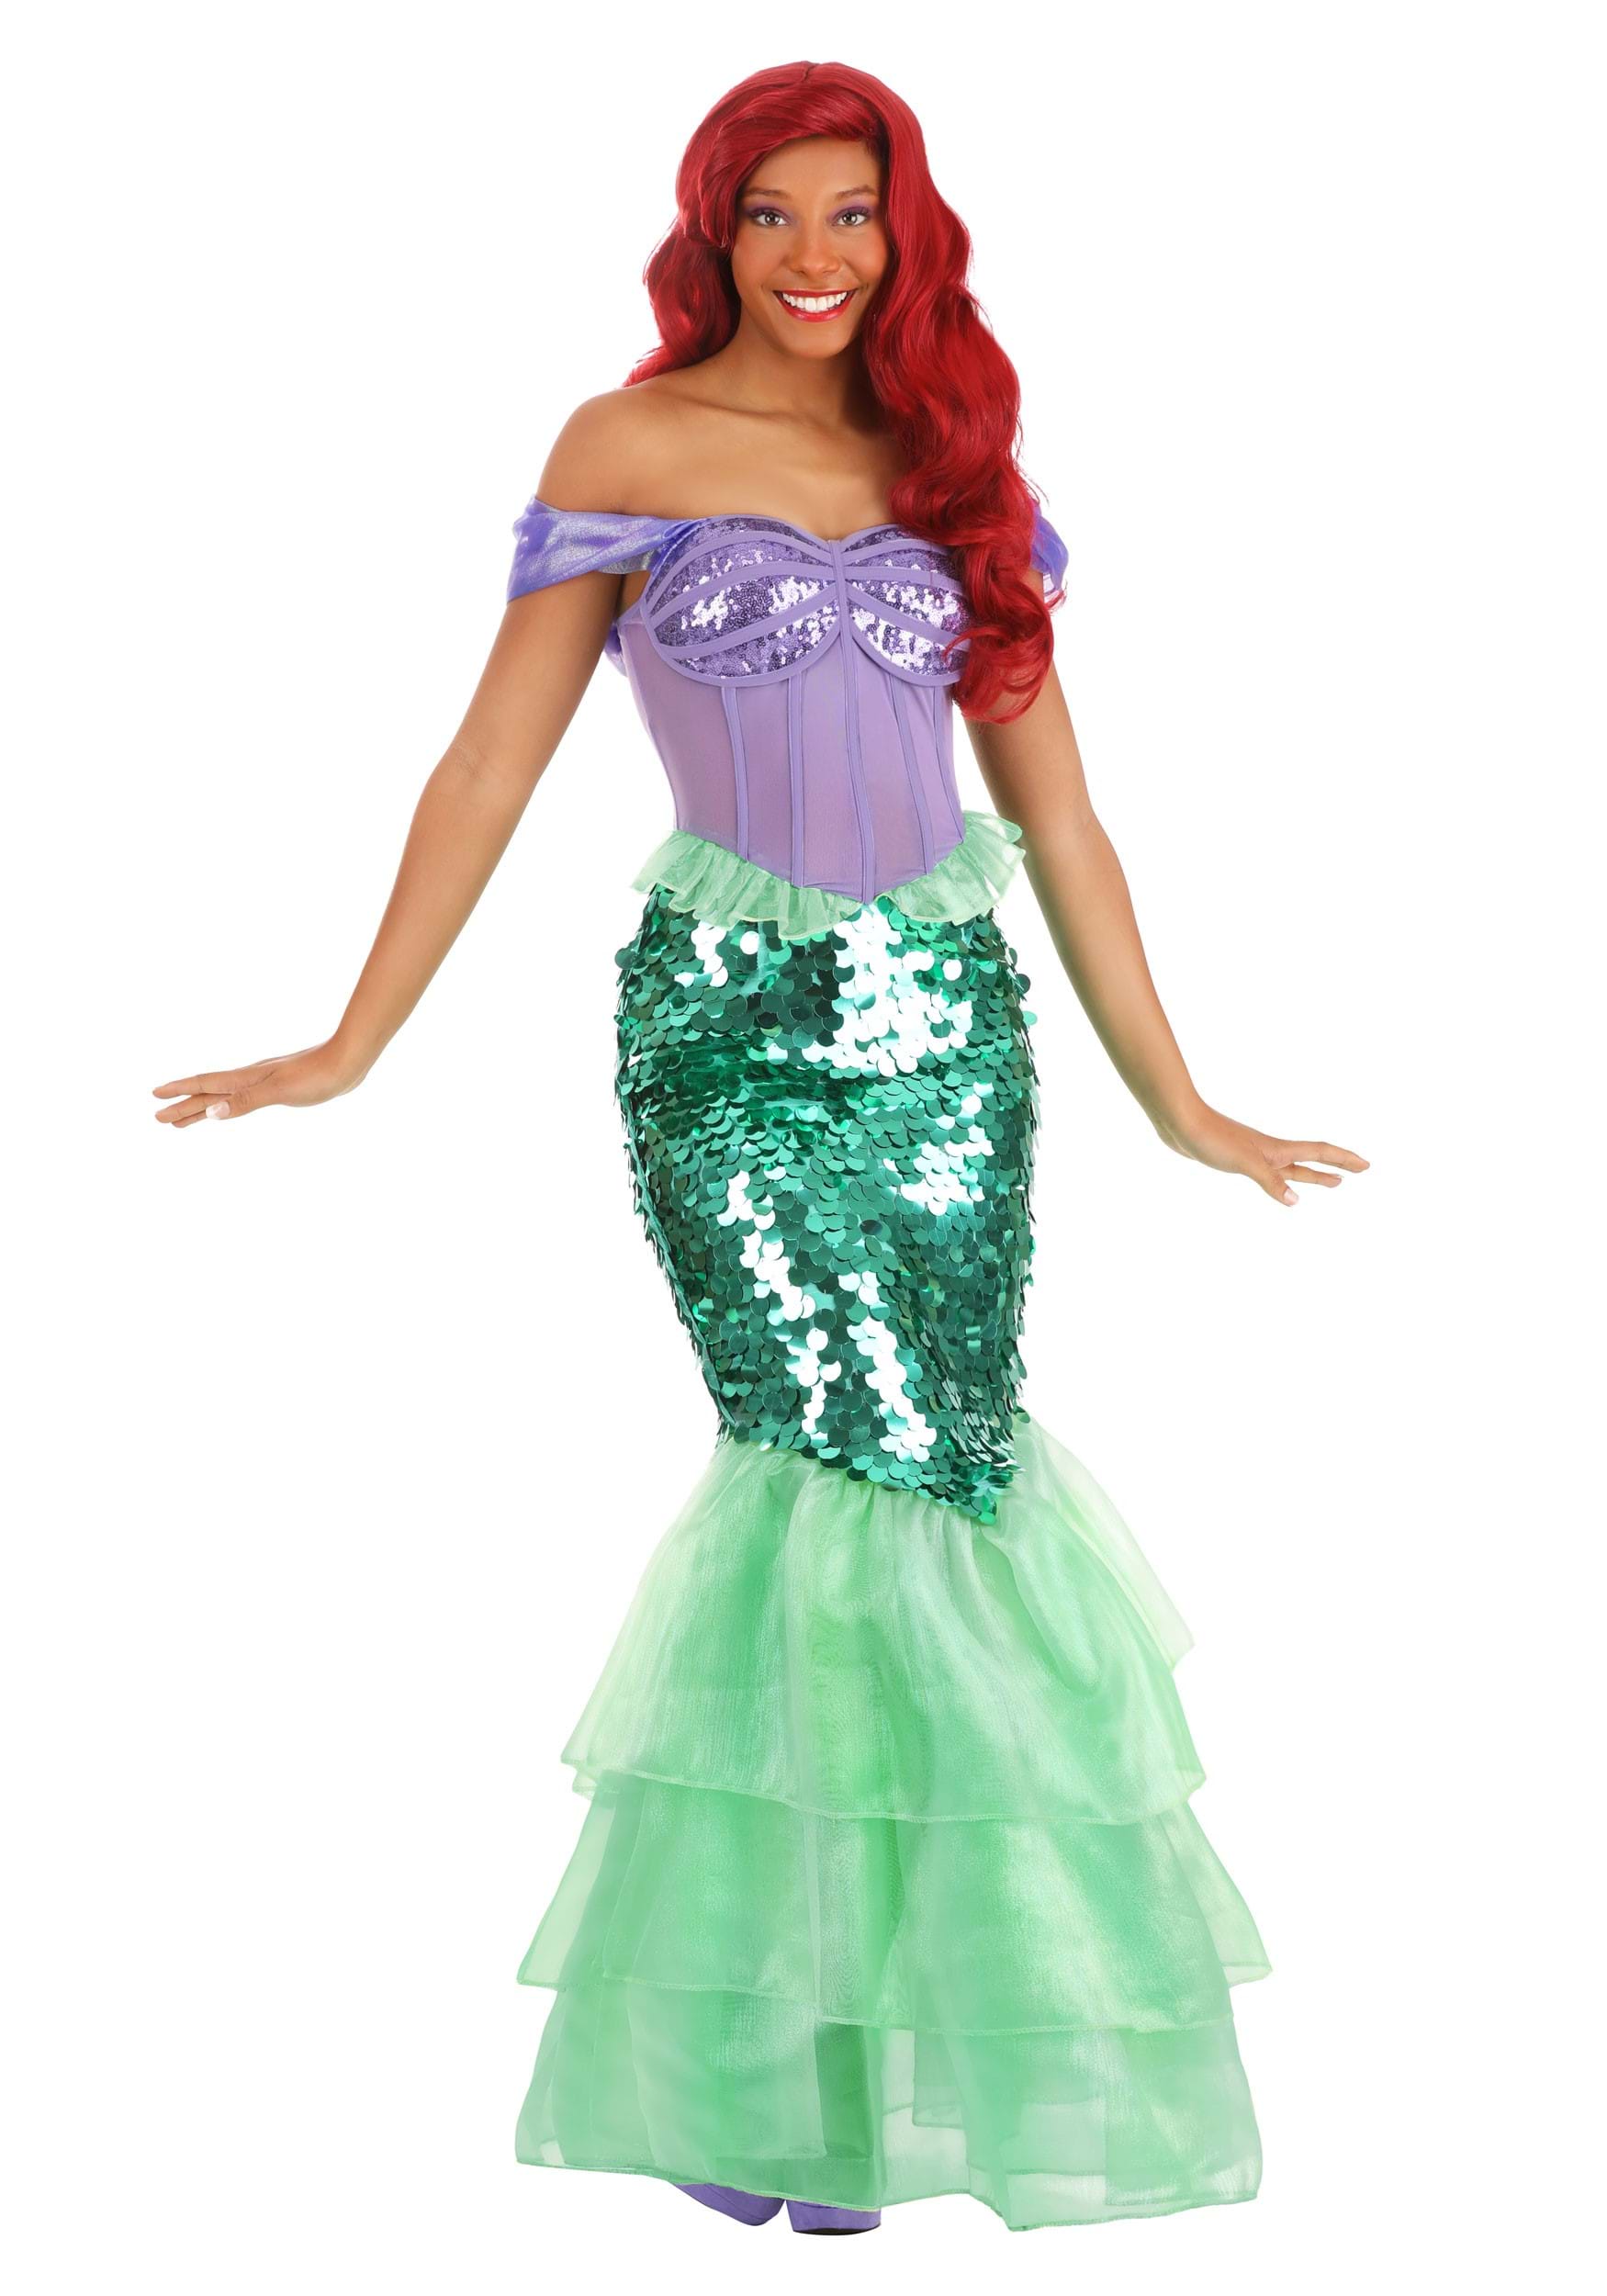 7.) Disney Little Mermaid Premium Ariel Mermaid Dress for Women